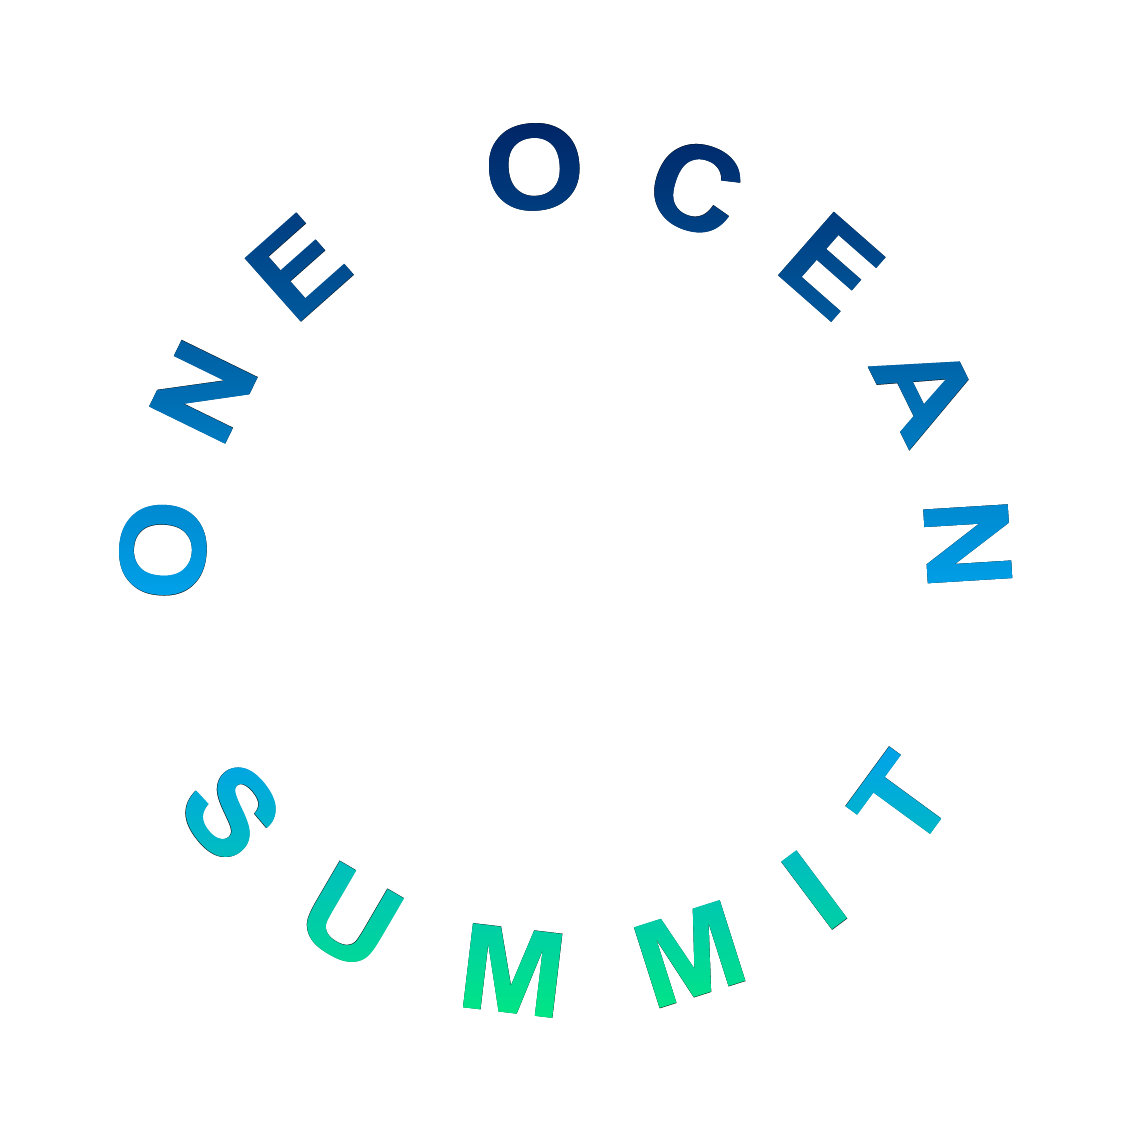 One Ocean Summit